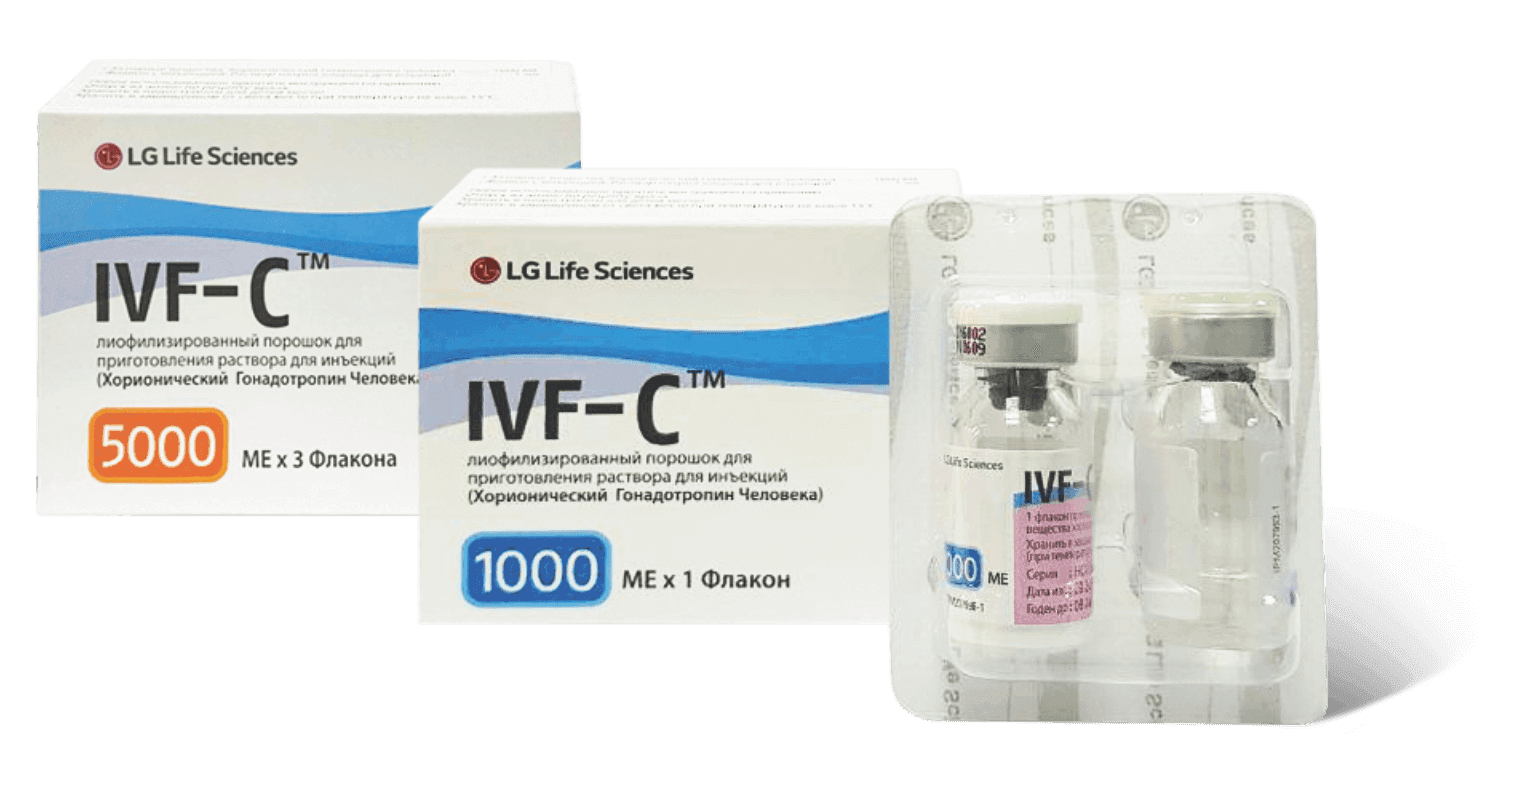 IVF C poroshok 5000me N3